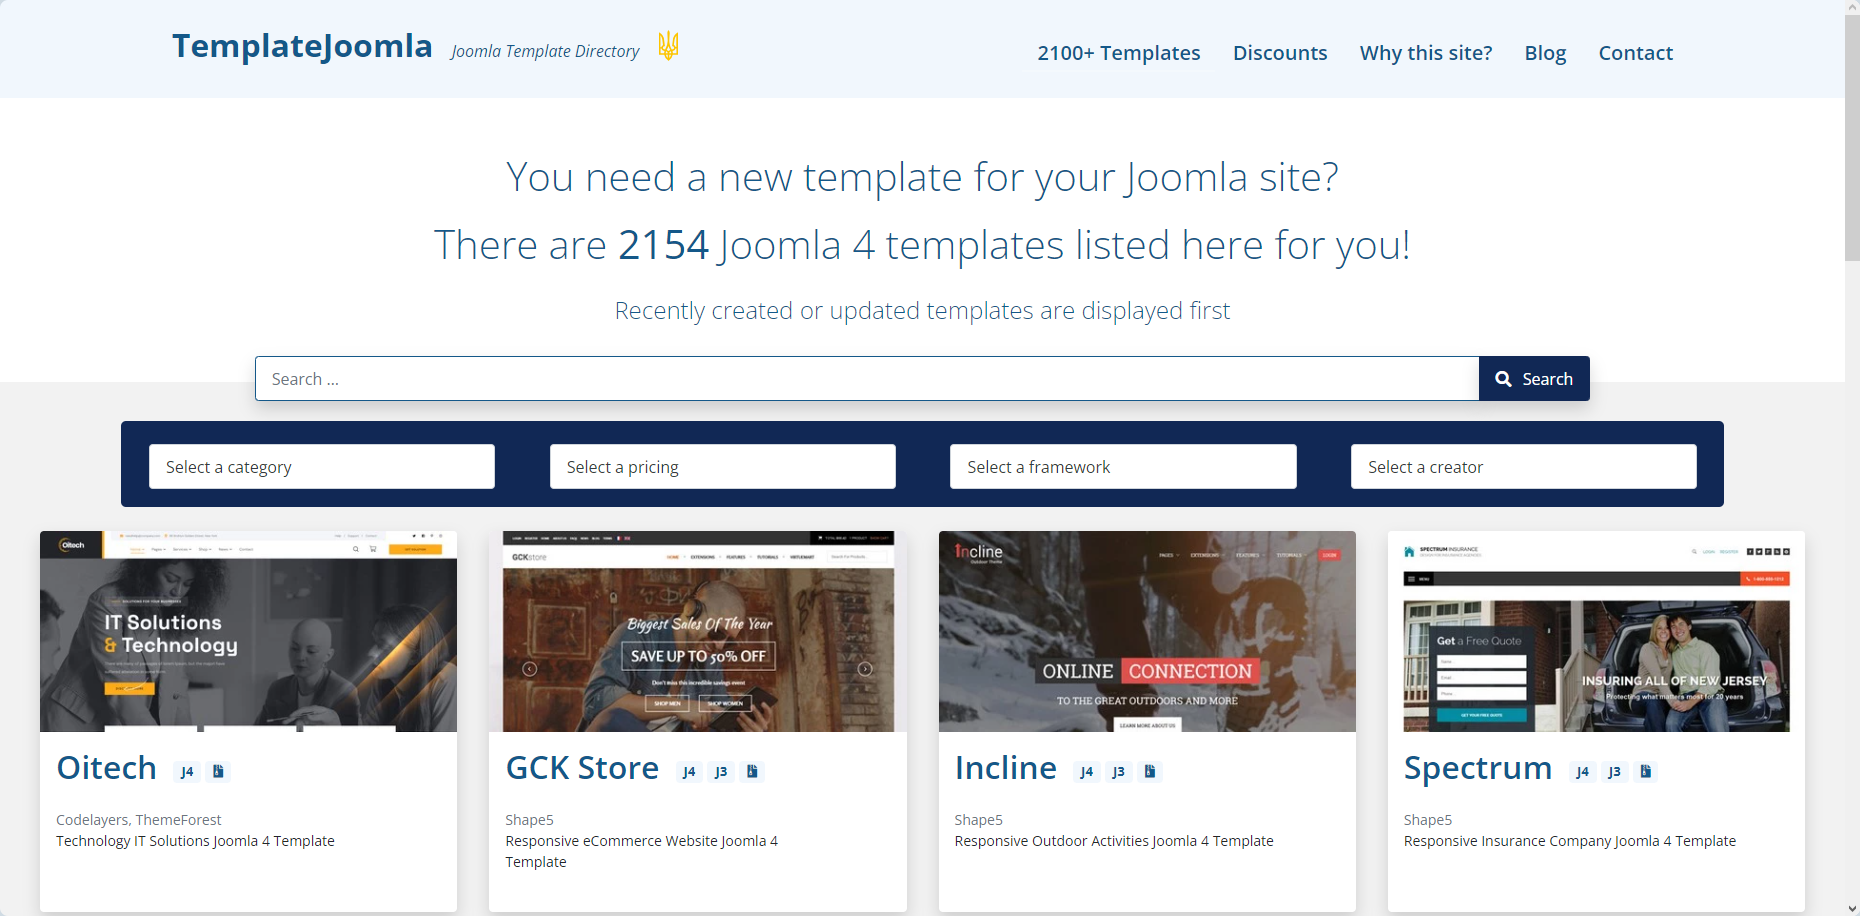 annuaire de templates pour Joomla - templatejoomla.com